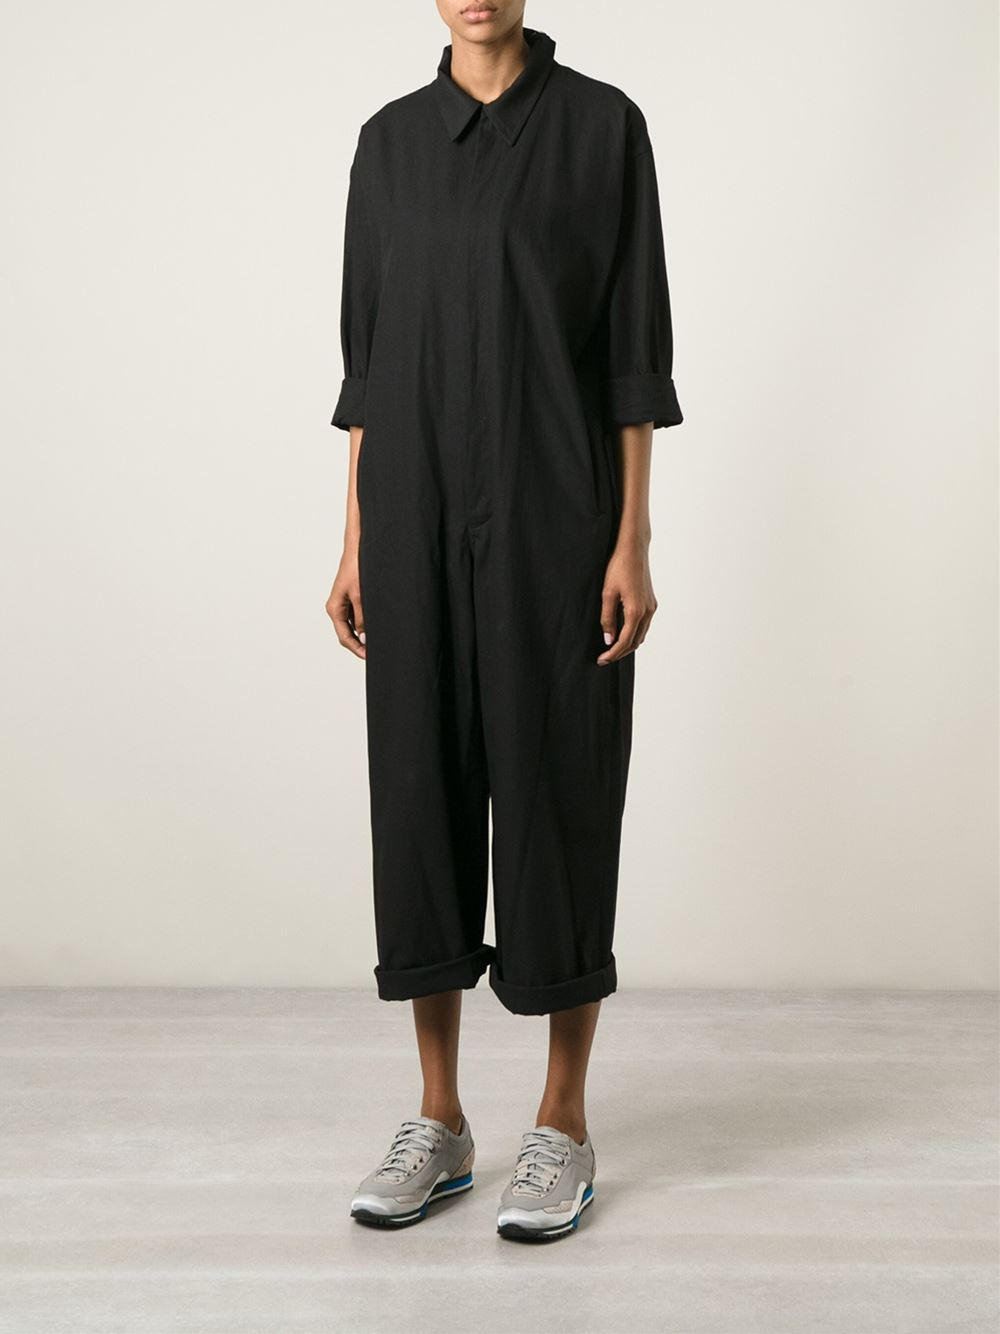 Yohji Yamamoto Cotton Front Back Zip Overalls in Black - Lyst